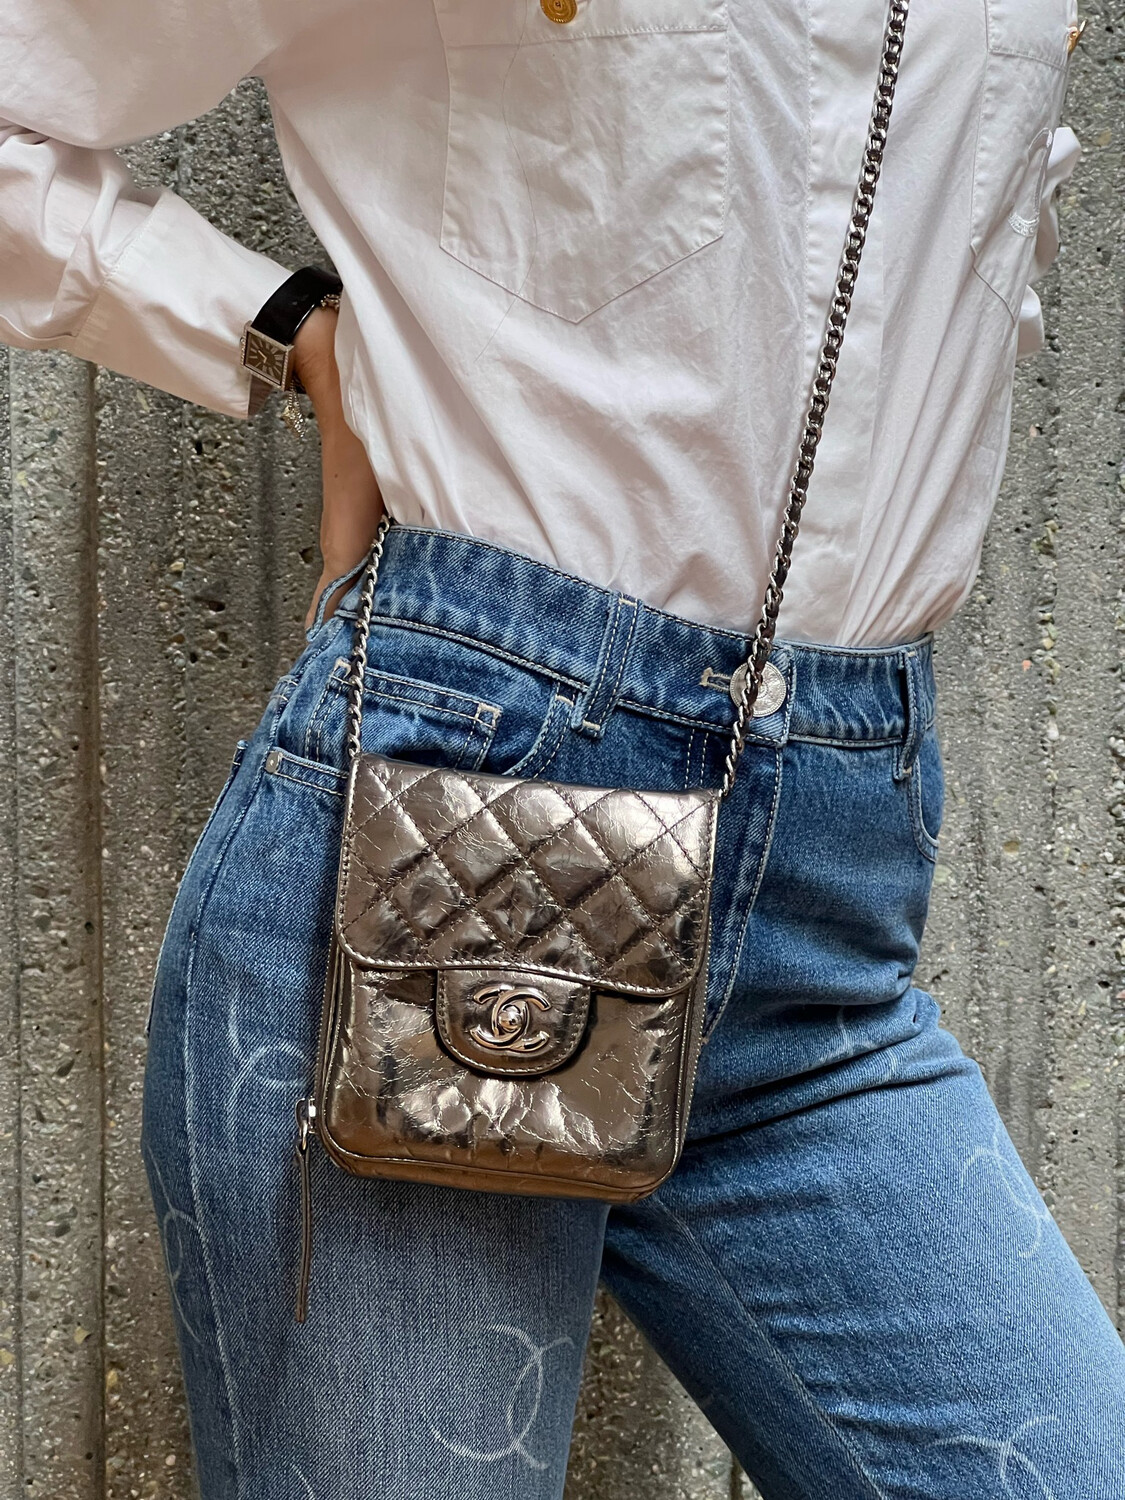 Chanel Small Woc CC Flap Bag